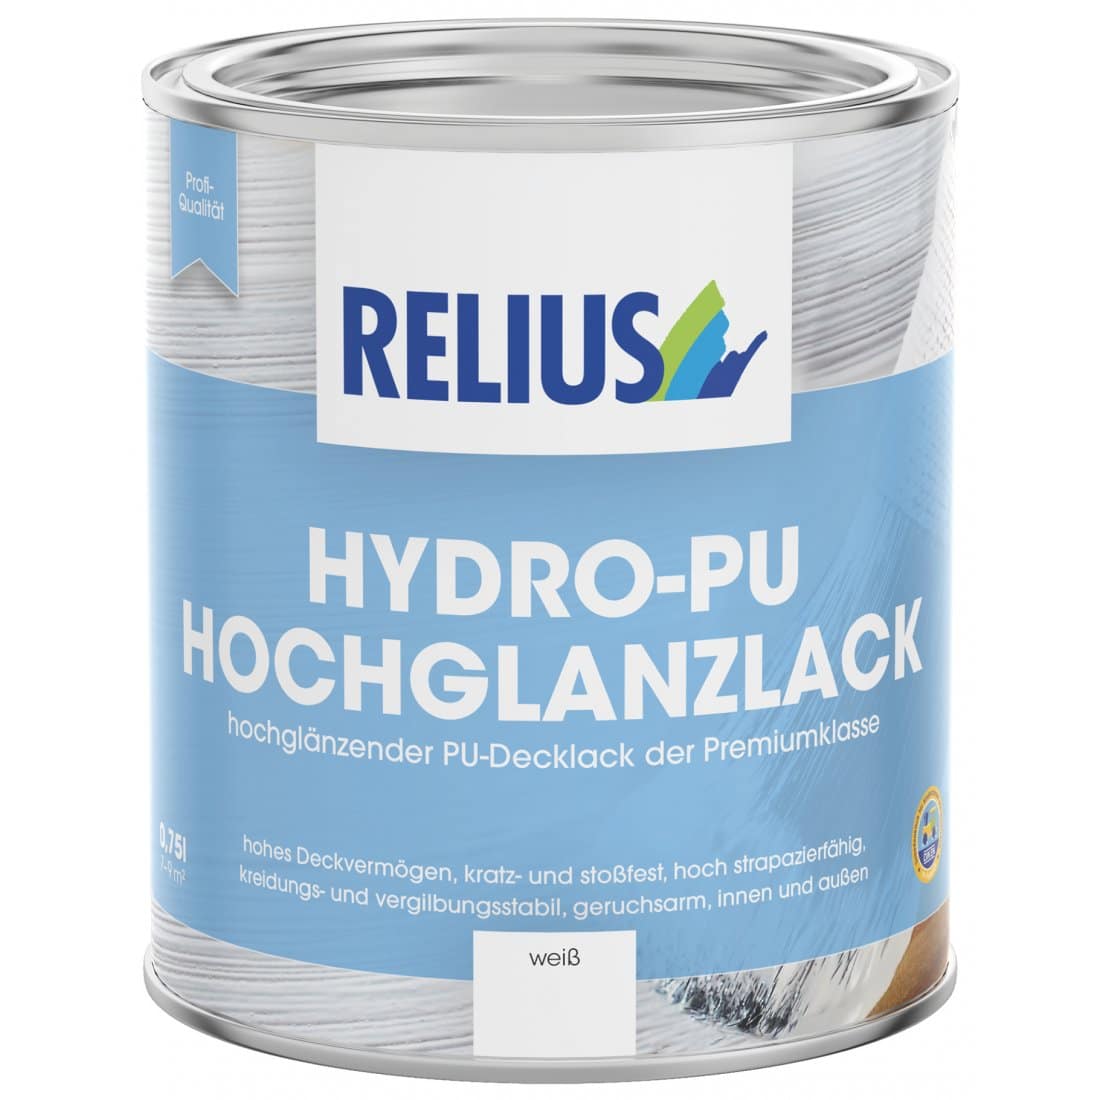 Relius Hydro PU Hochglanzlack